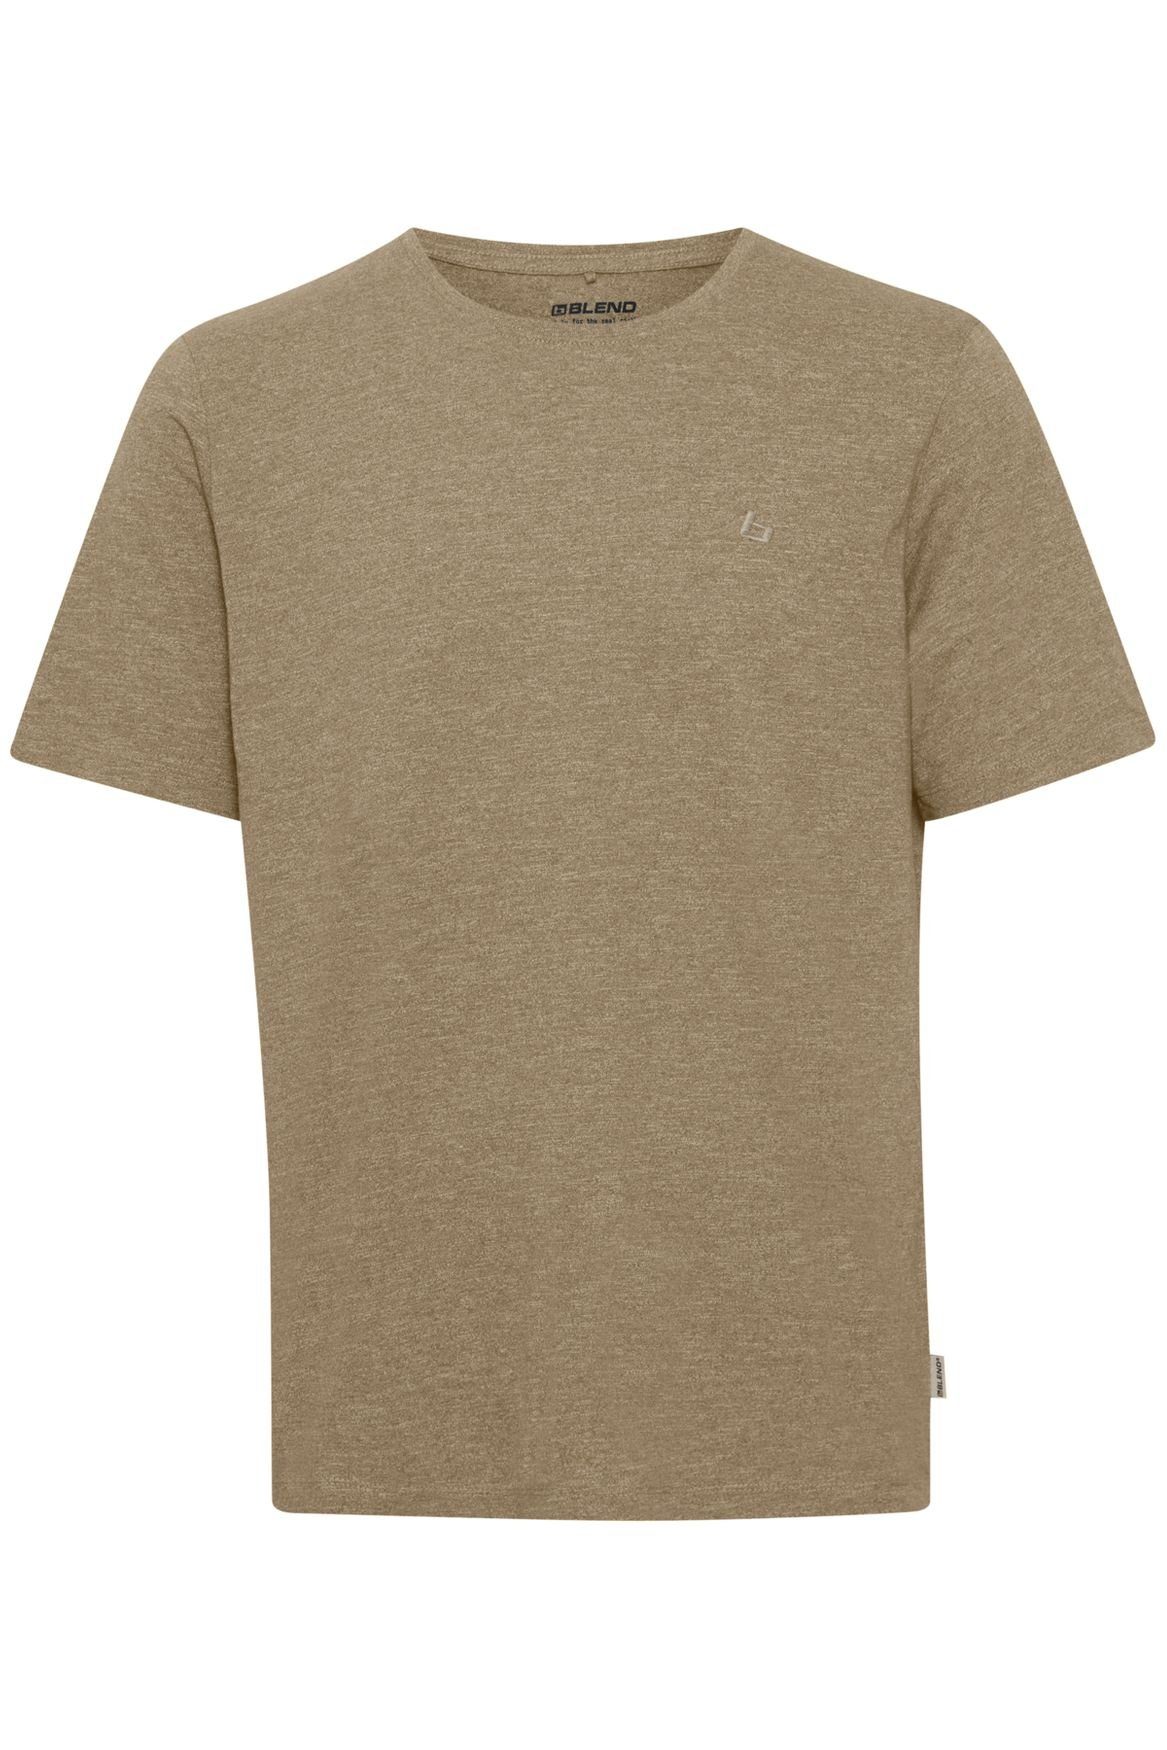 Kurzarm Stretch Rundhals Beige BHWilton T-Shirt in Blend 5030 T-Shirt Shirt